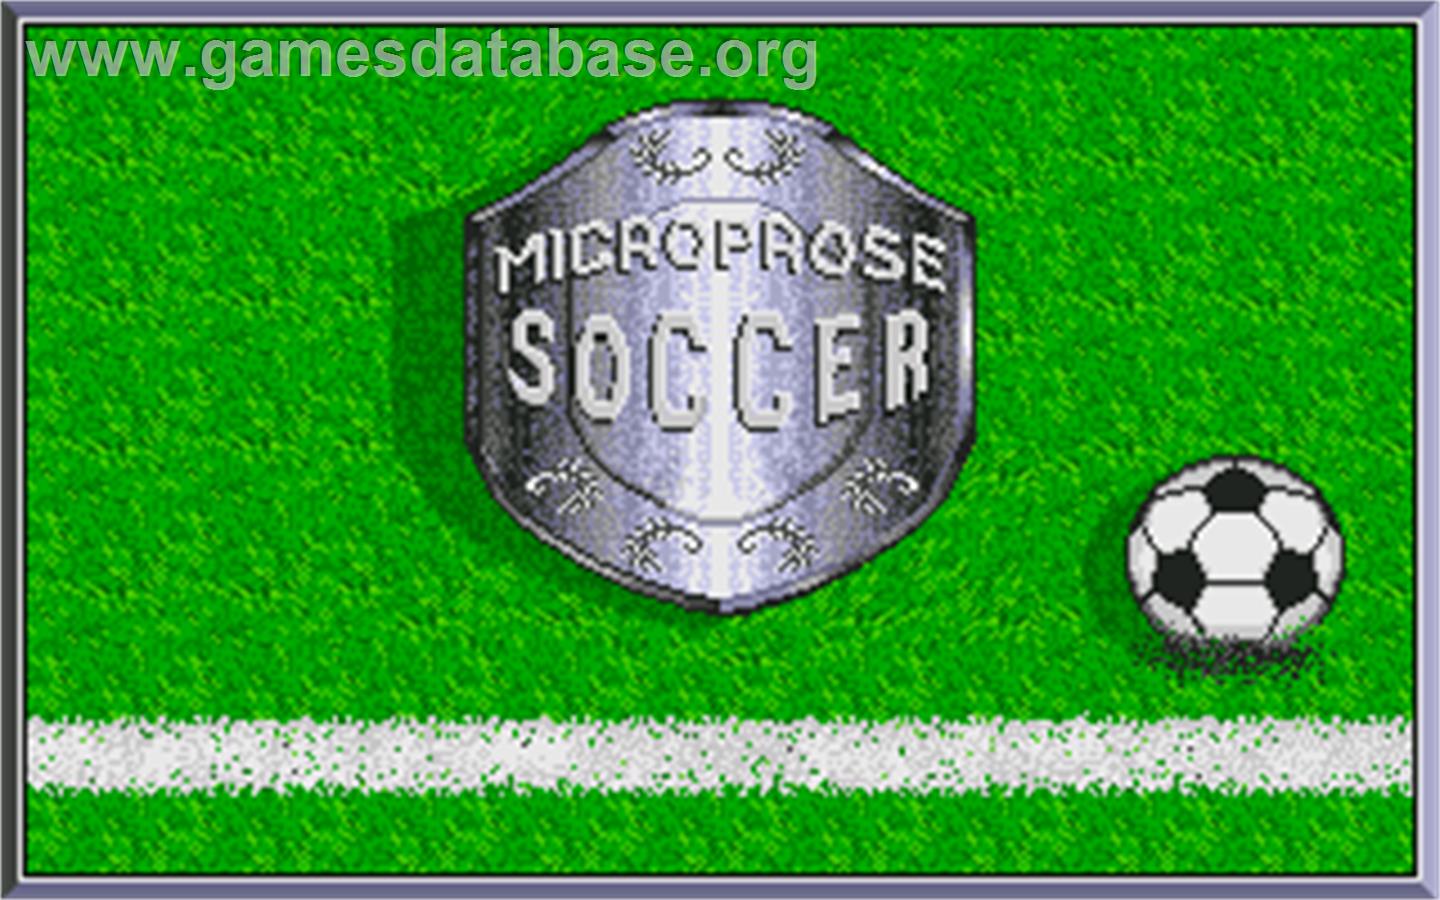 Microprose Pro Soccer - Atari ST - Artwork - Title Screen